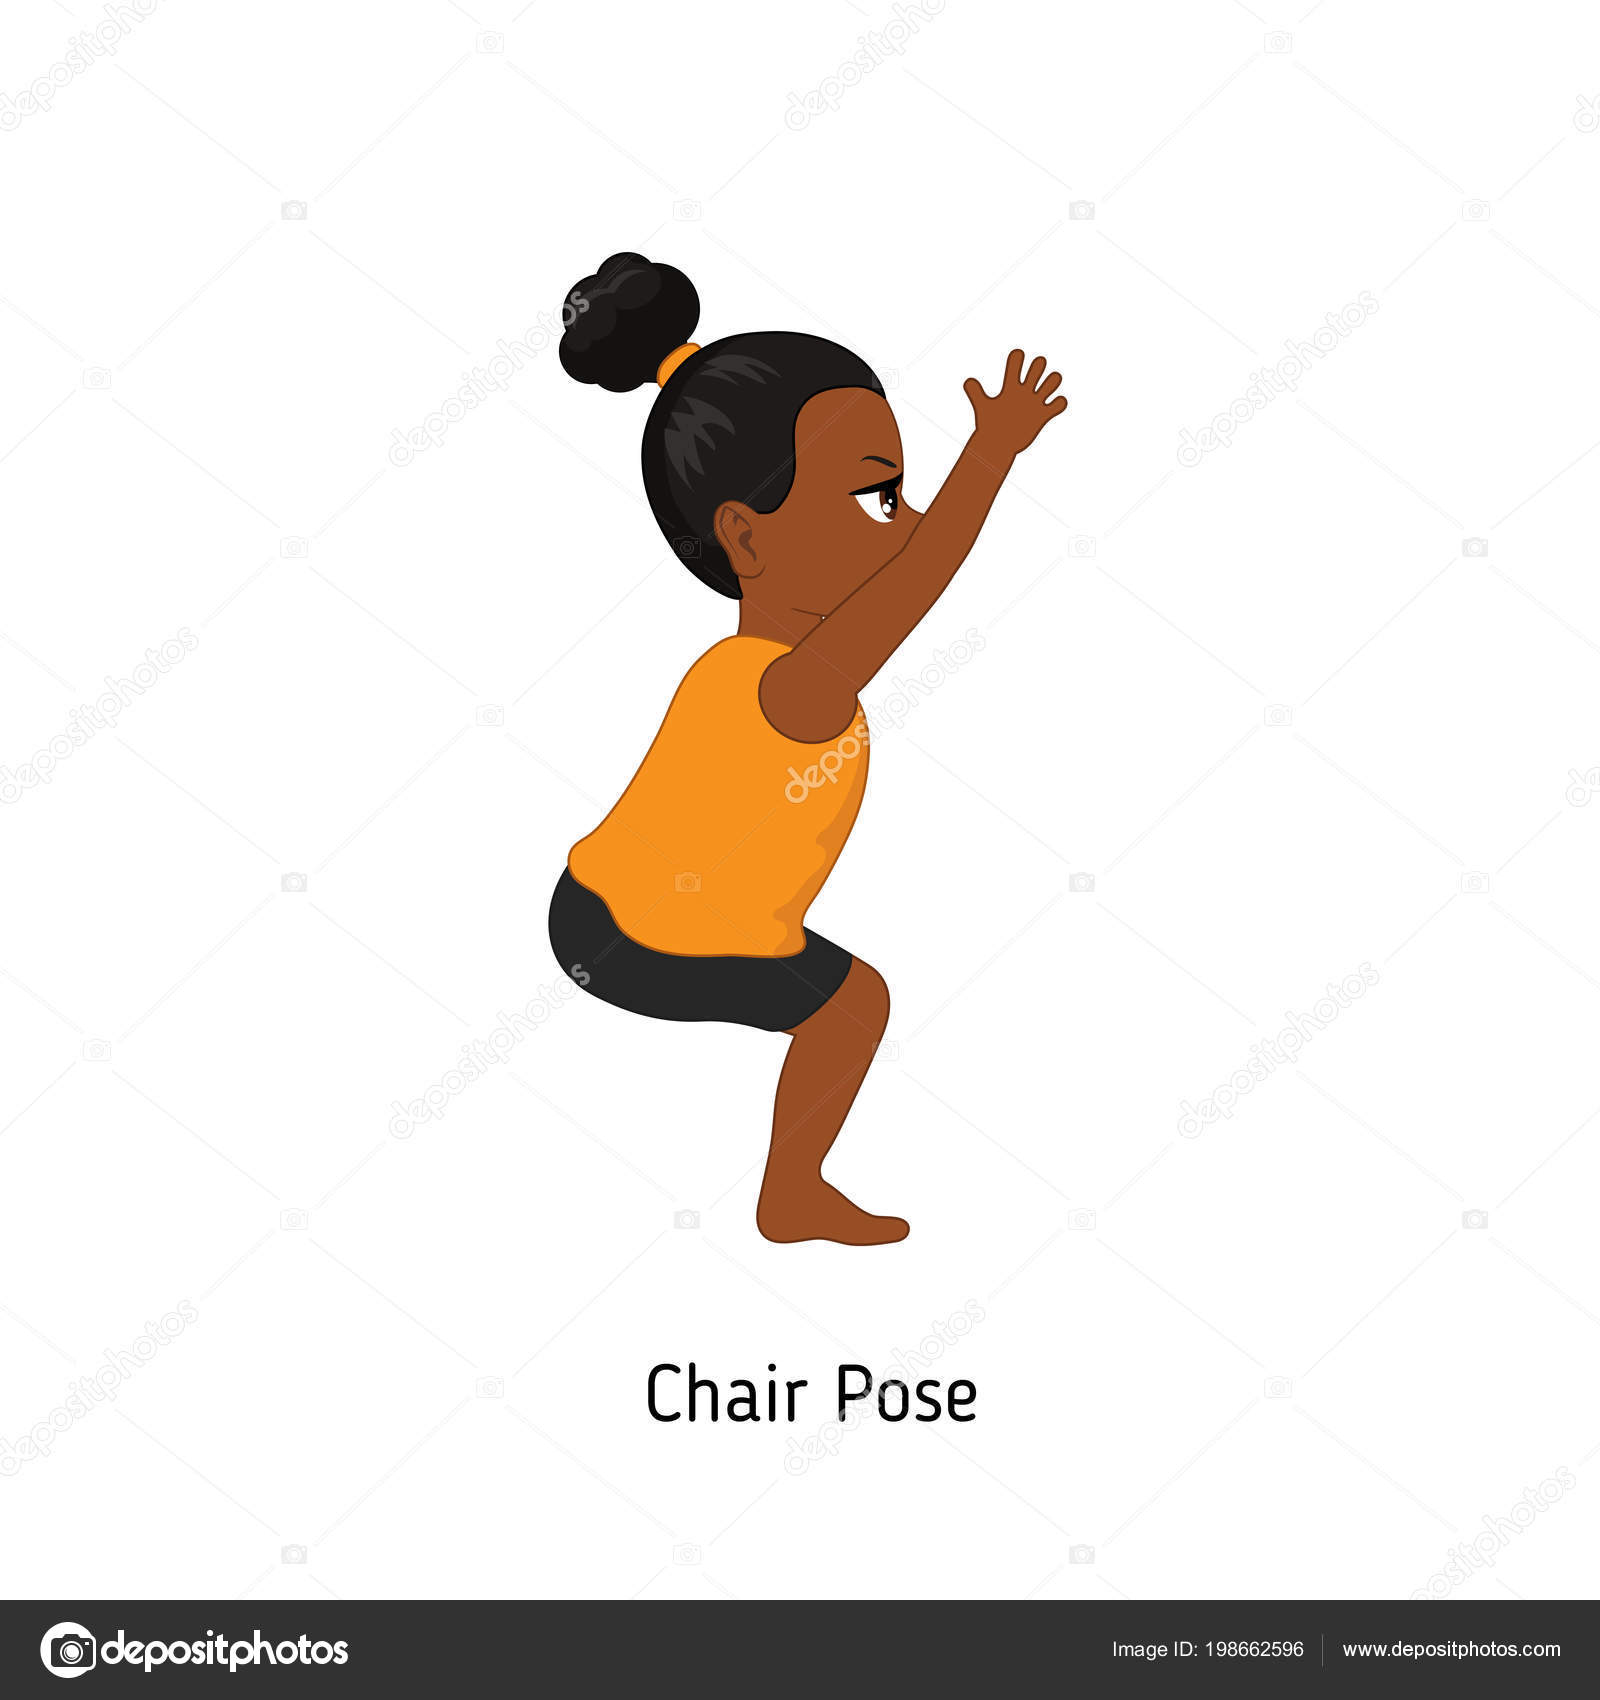 Chair Yoga For Senior Citizens: Chair Yoga For Back Pain